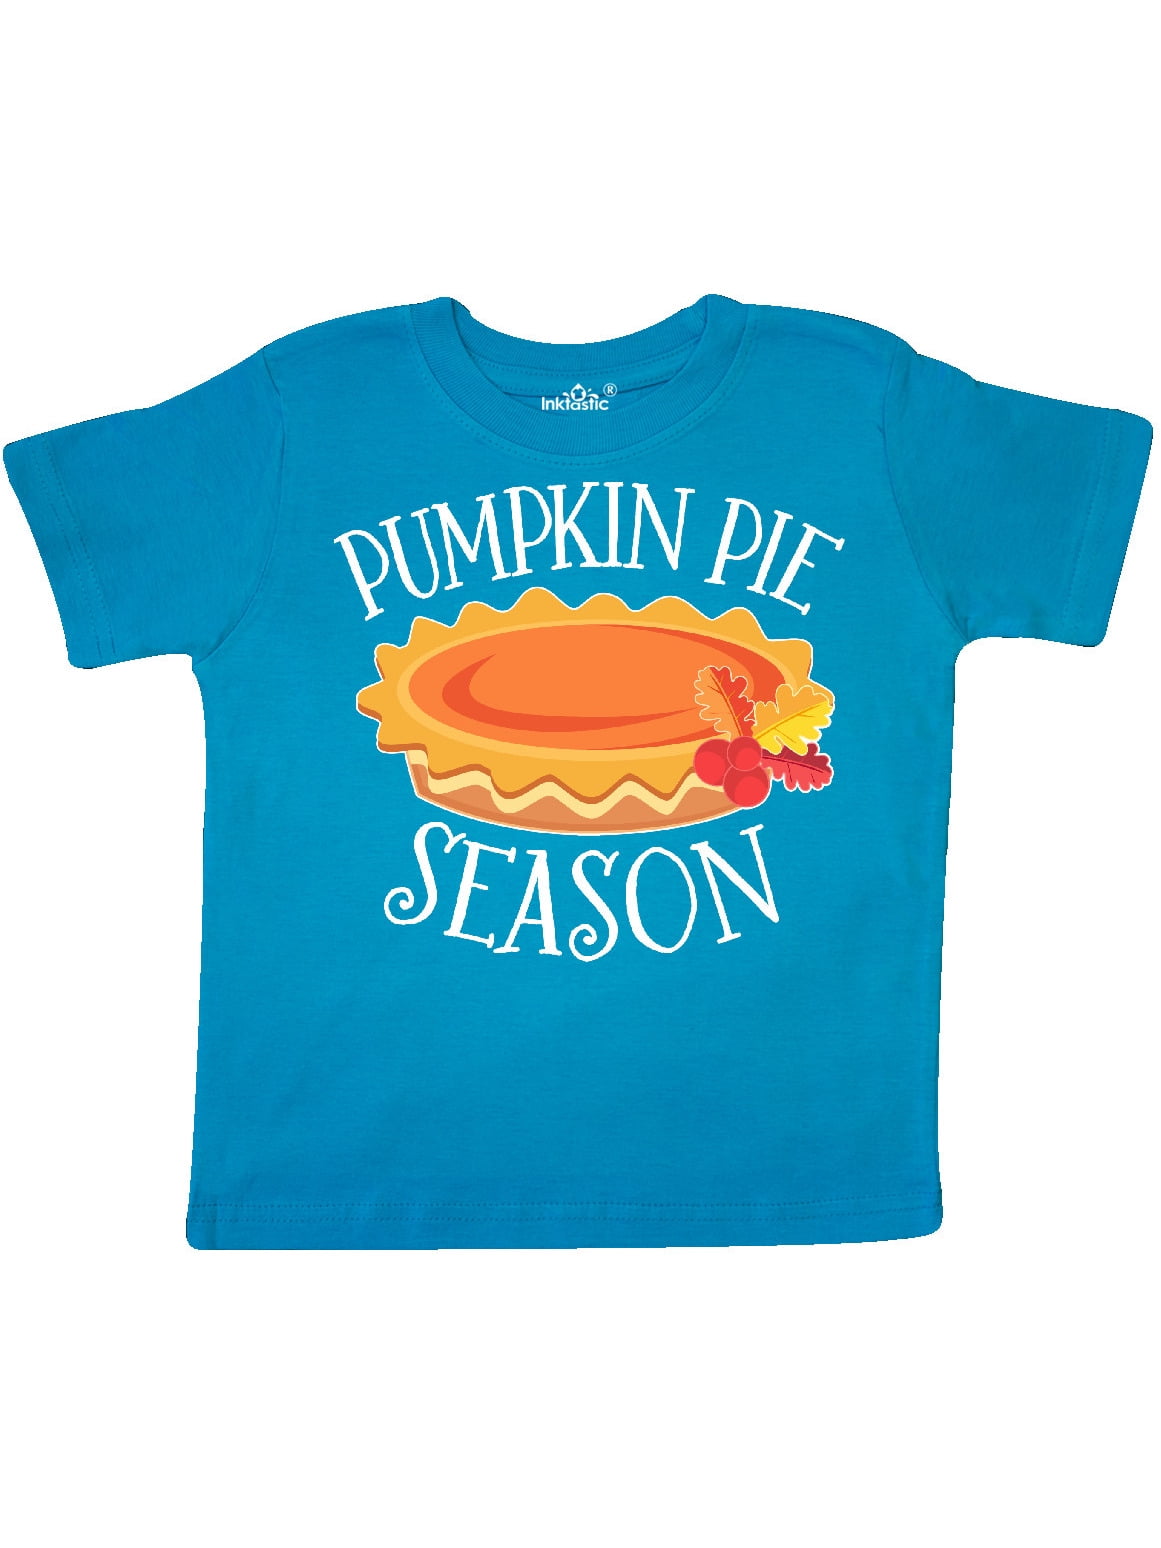 Thanksgiving Pumpkin Pie Season and Autumn Leaves Toddler ...